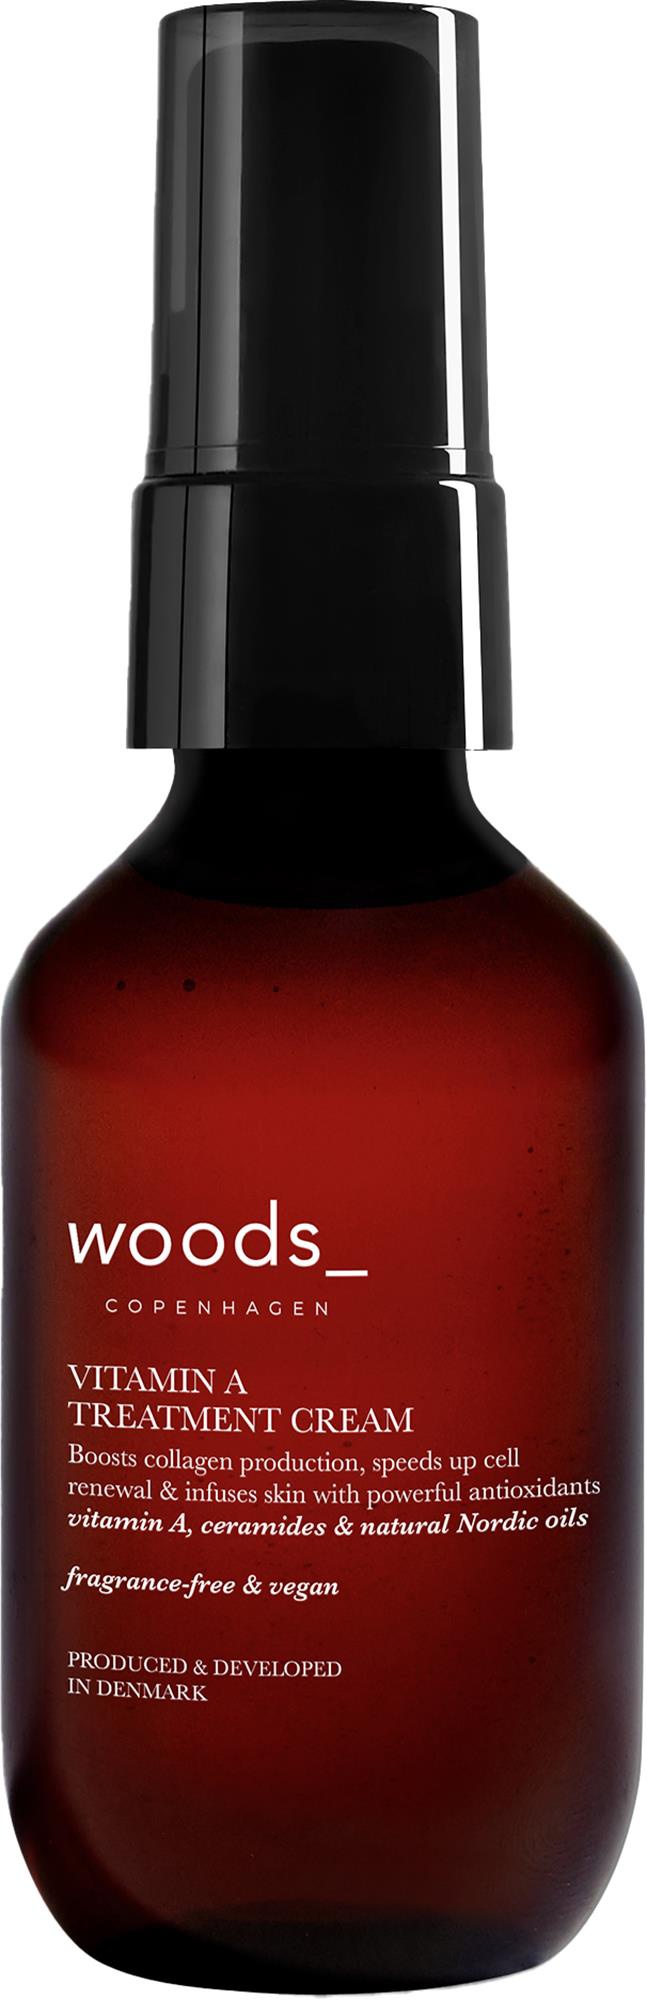 Woods Copenhagen Vitamin A Treatment Cream